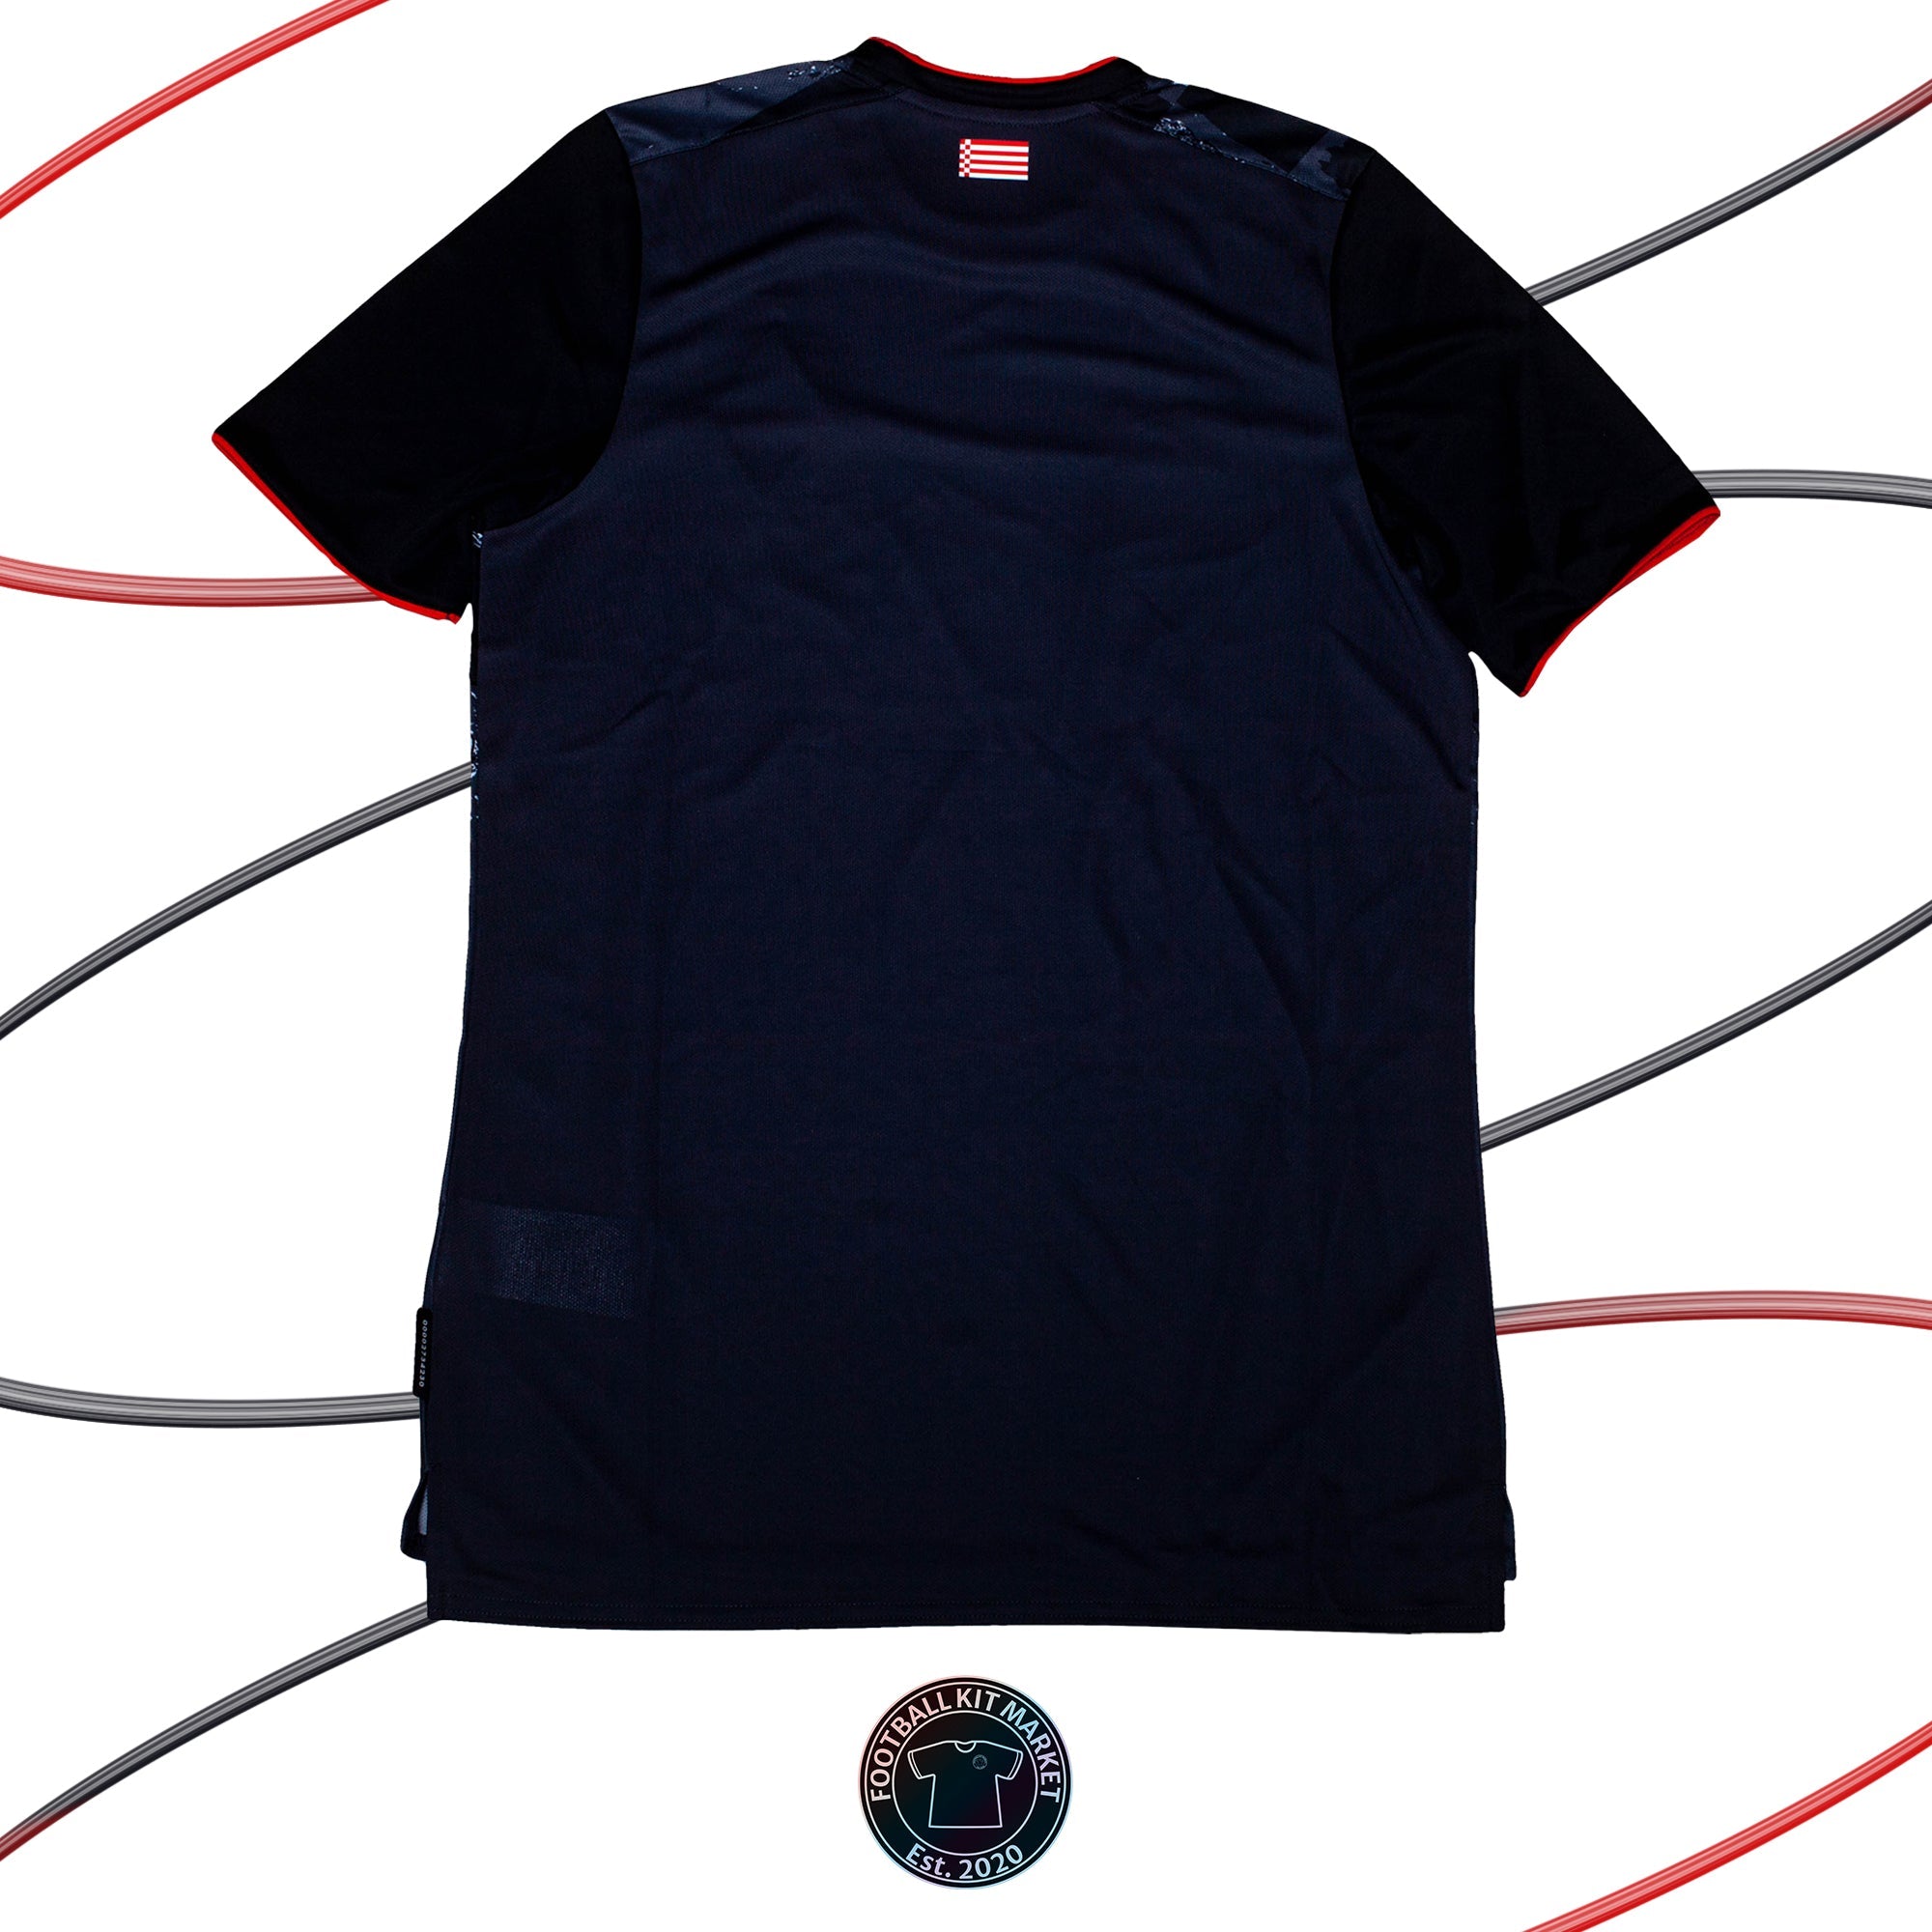 Genuine WERDER BREMEN 3rd Shirt ( 2020-2021 ) - UMBRO (M) - Product Image from Football Kit Market